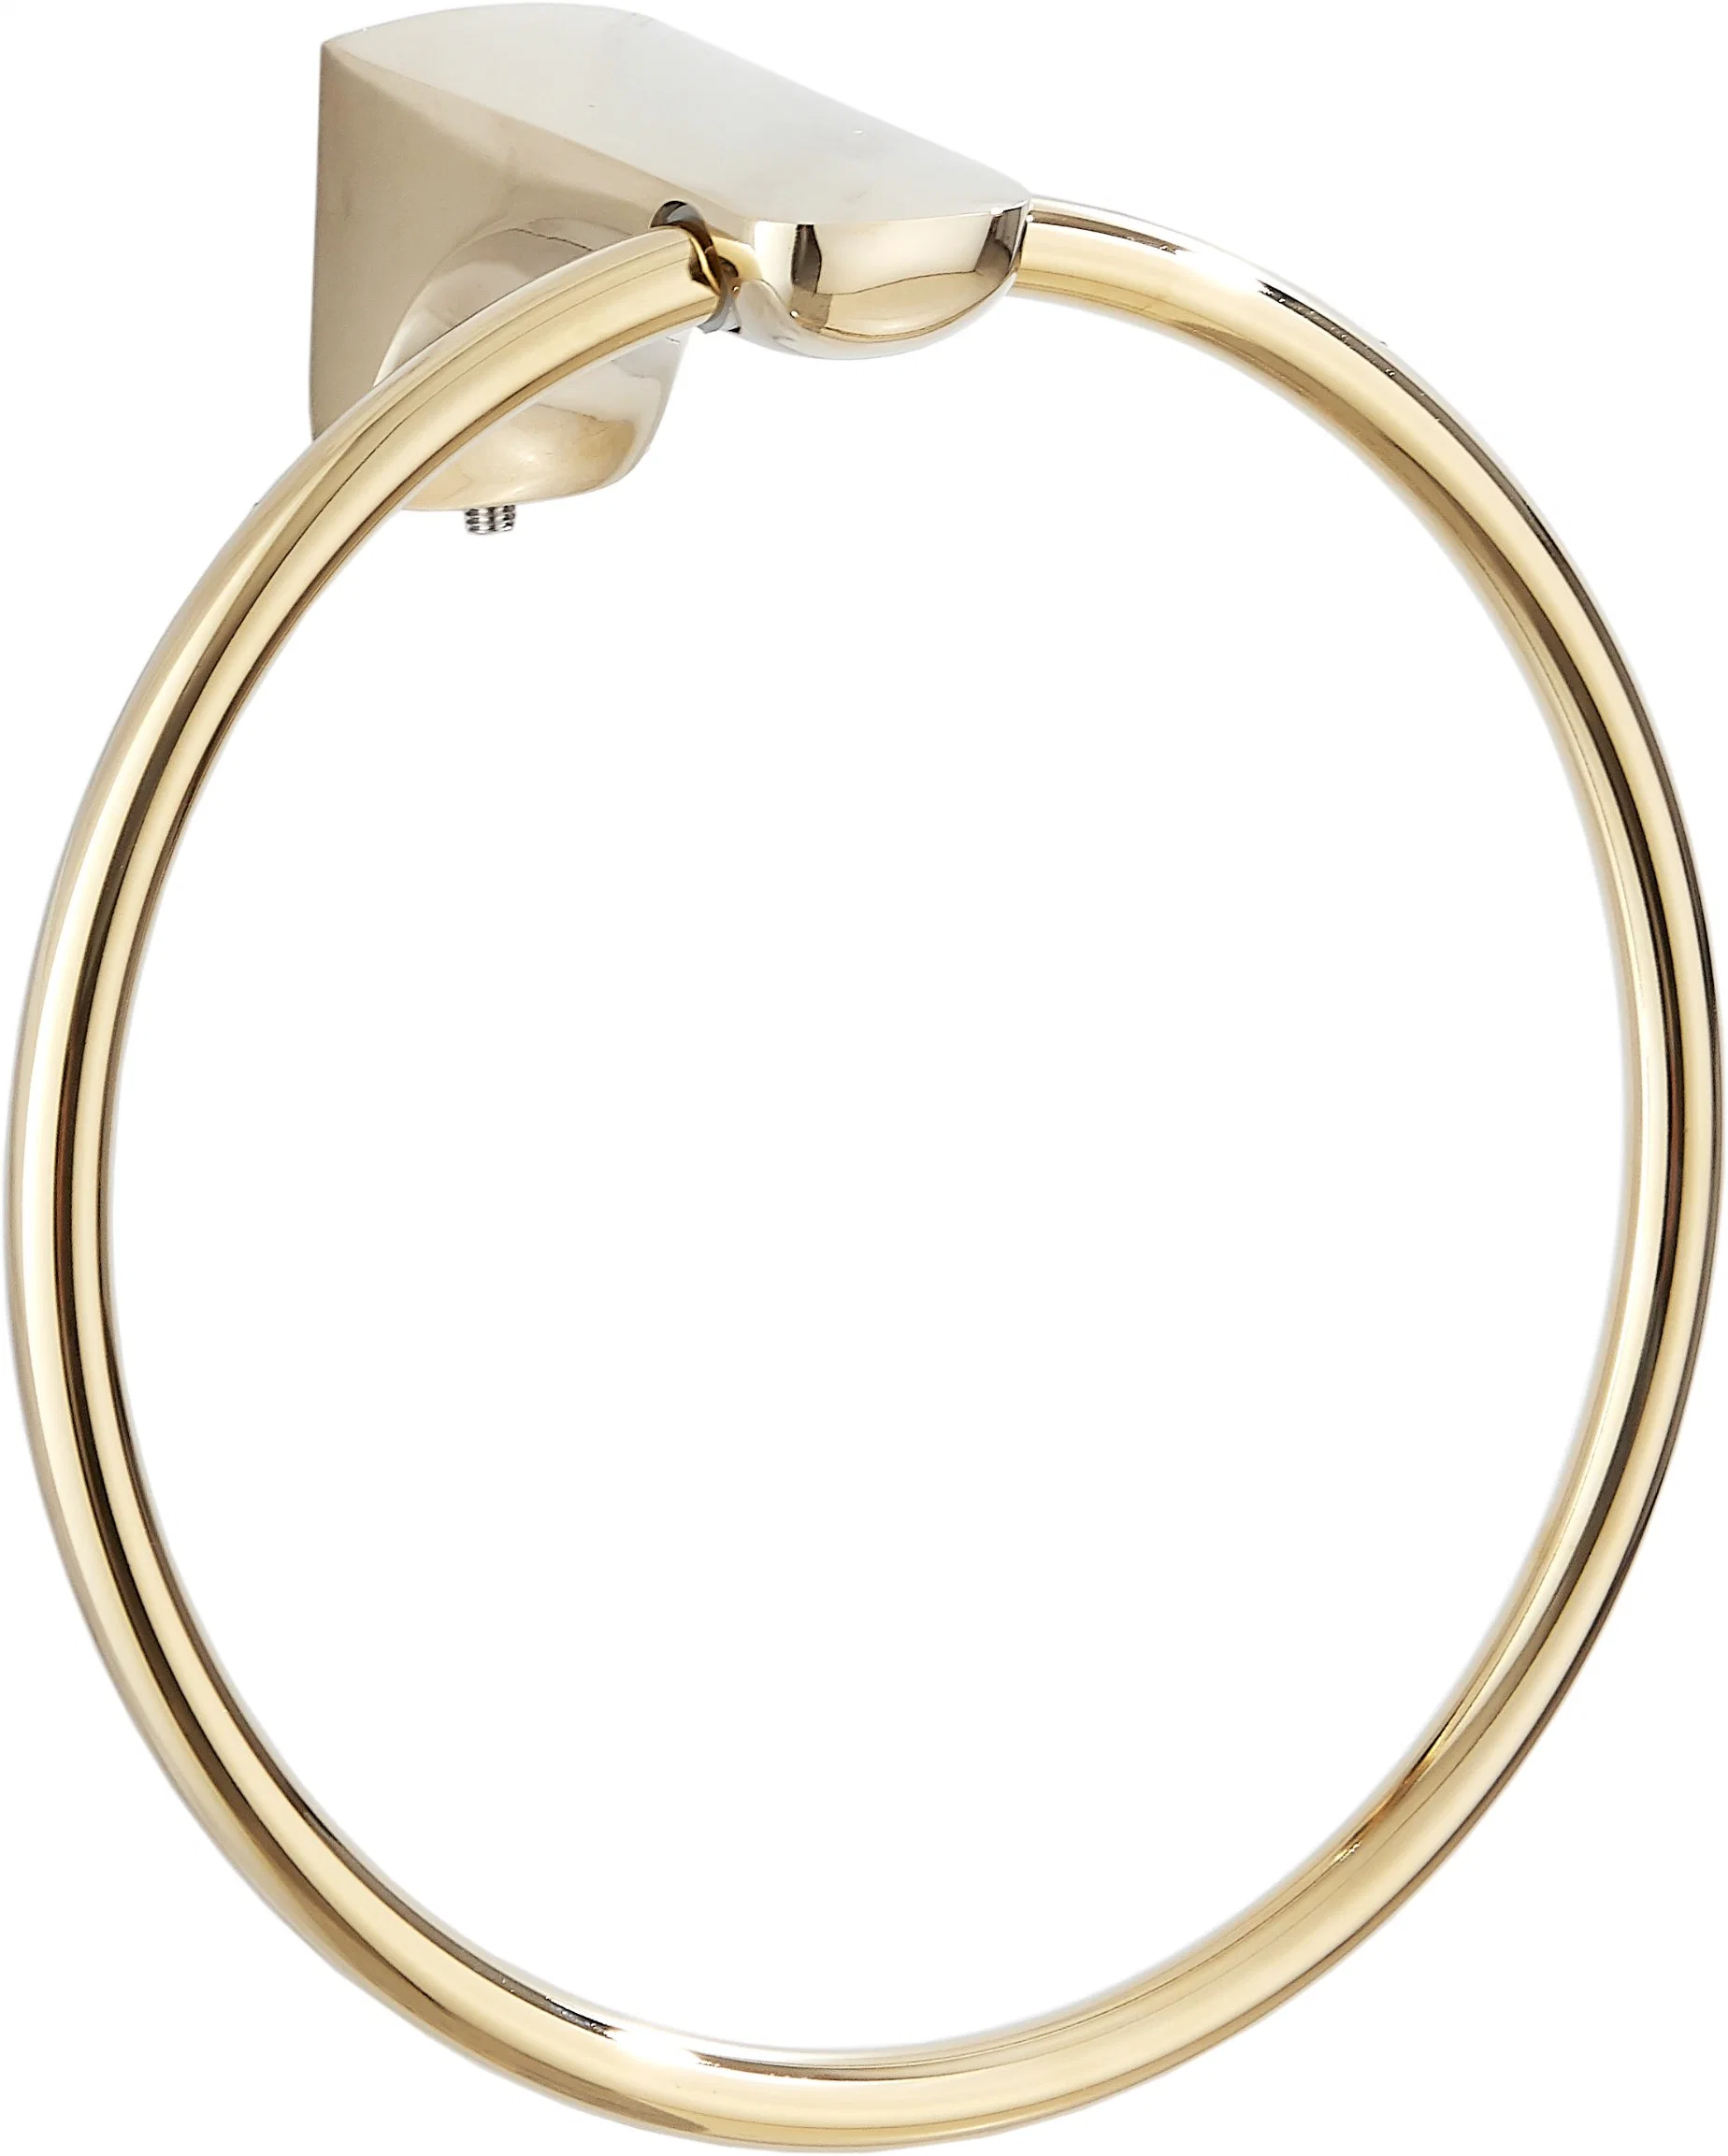 European Design Brass Towel Holder Brushed Gold Towel Ring for Bathroom Accessories